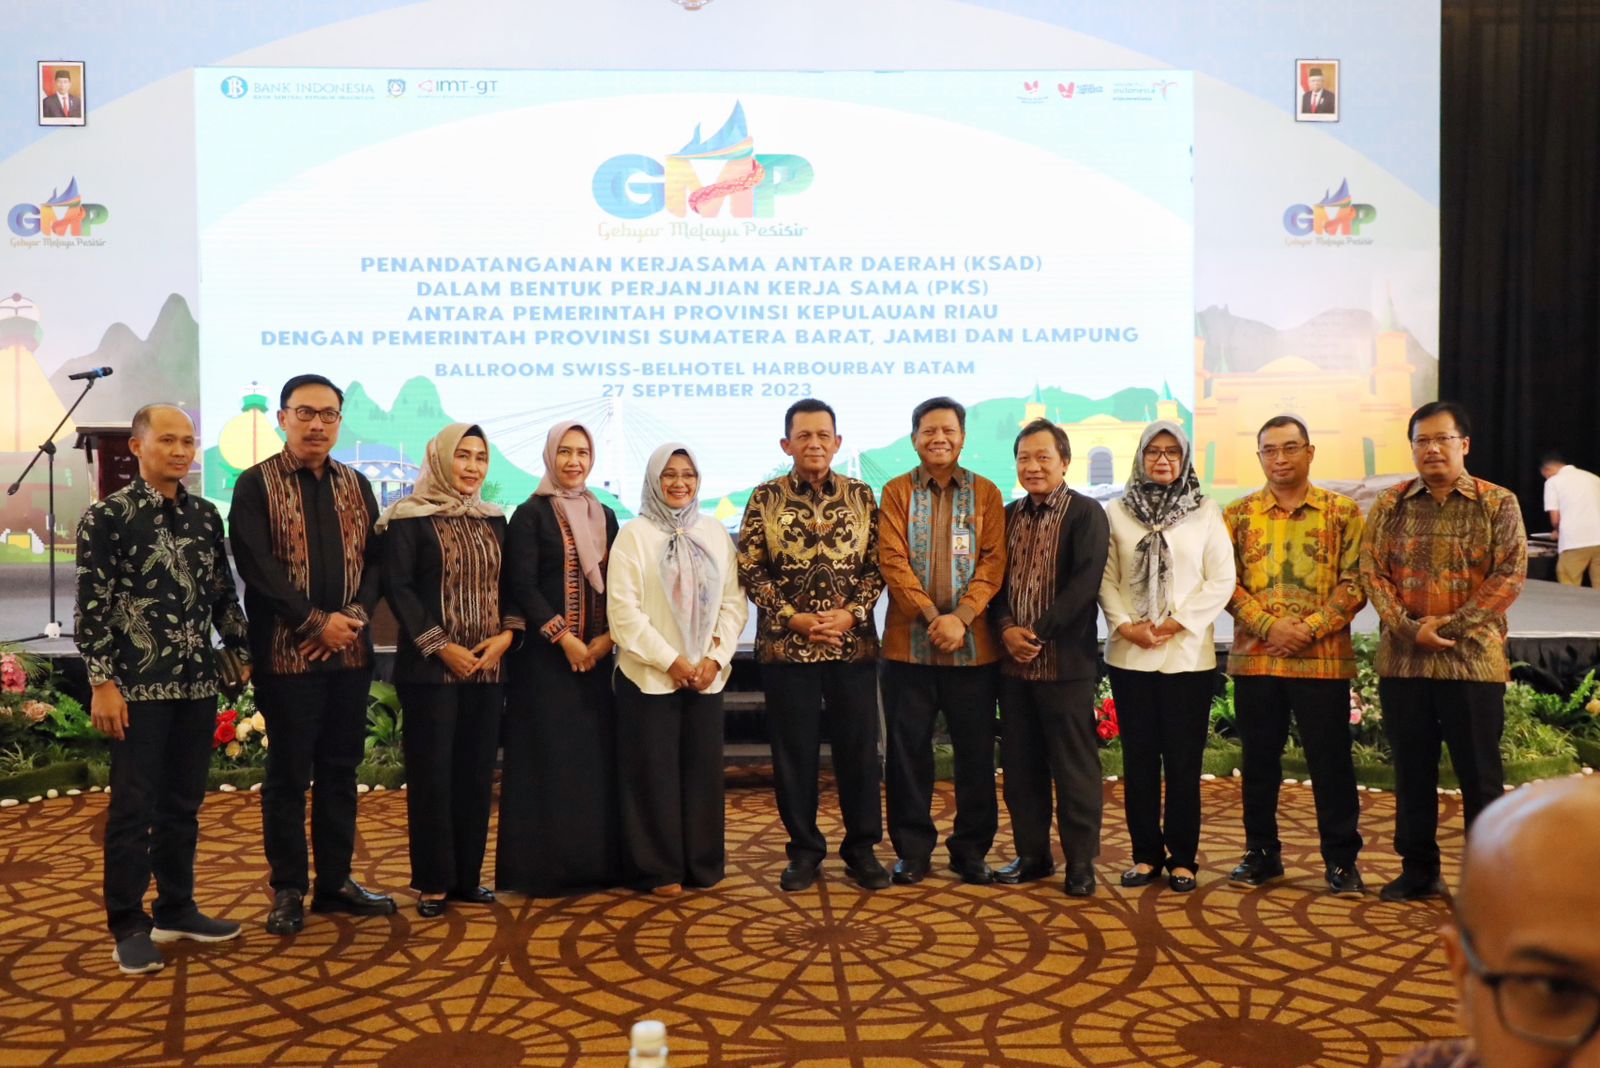 Pemprov Lampung Jalin Kerjasama dengan Pemerintah Provinsi Kepulauan Riau, Provinsi Jambi, dan Provinsi Sumate